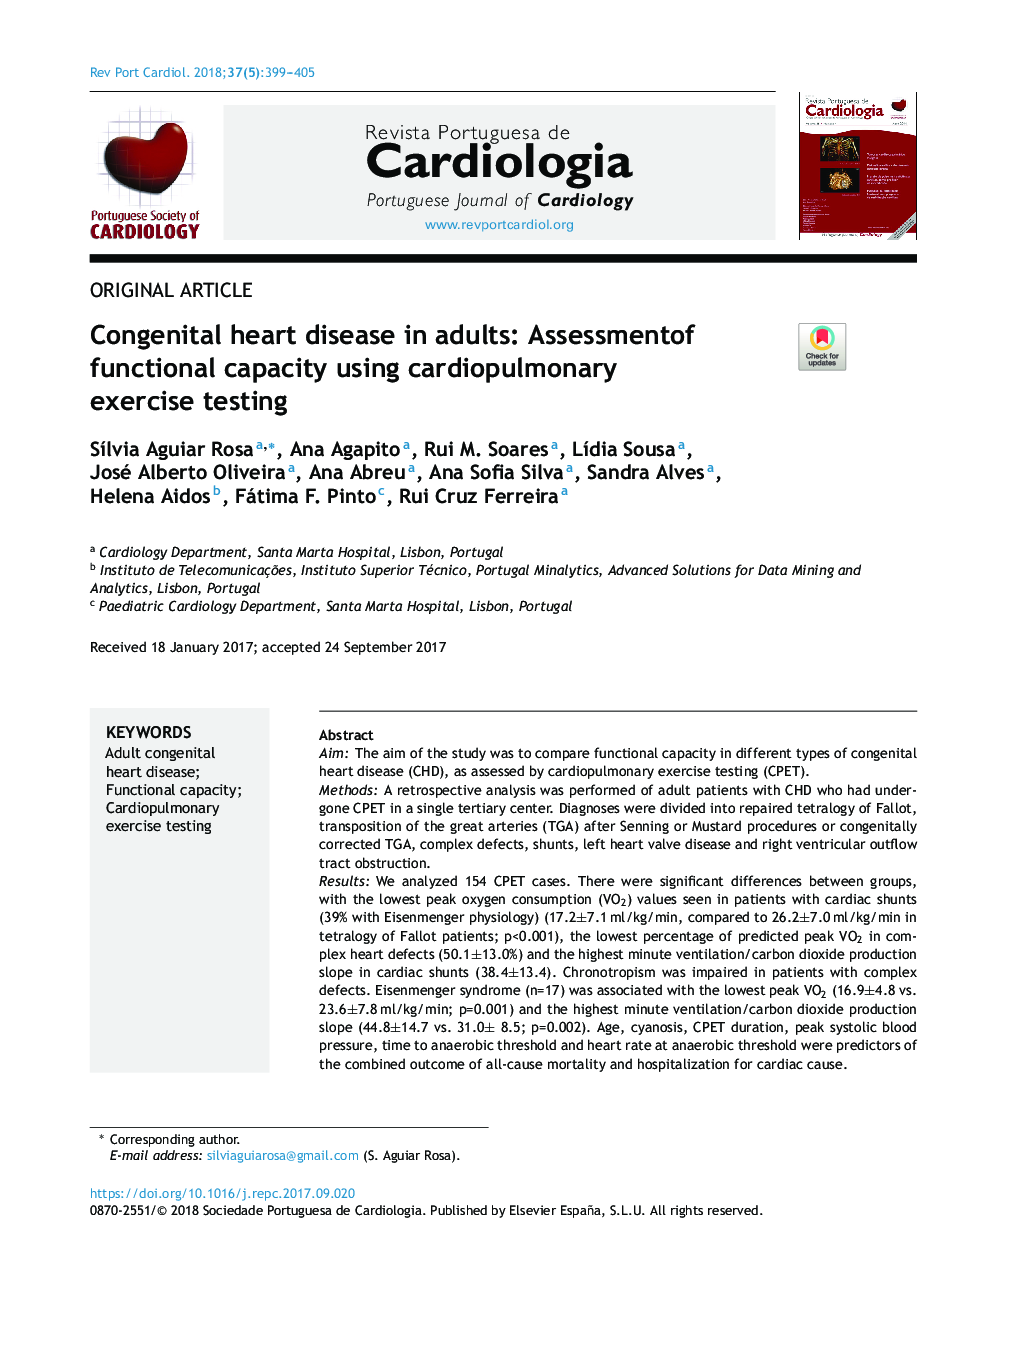 Congenital heart disease in adults: Assessmentof functional capacity using cardiopulmonary exercise testing